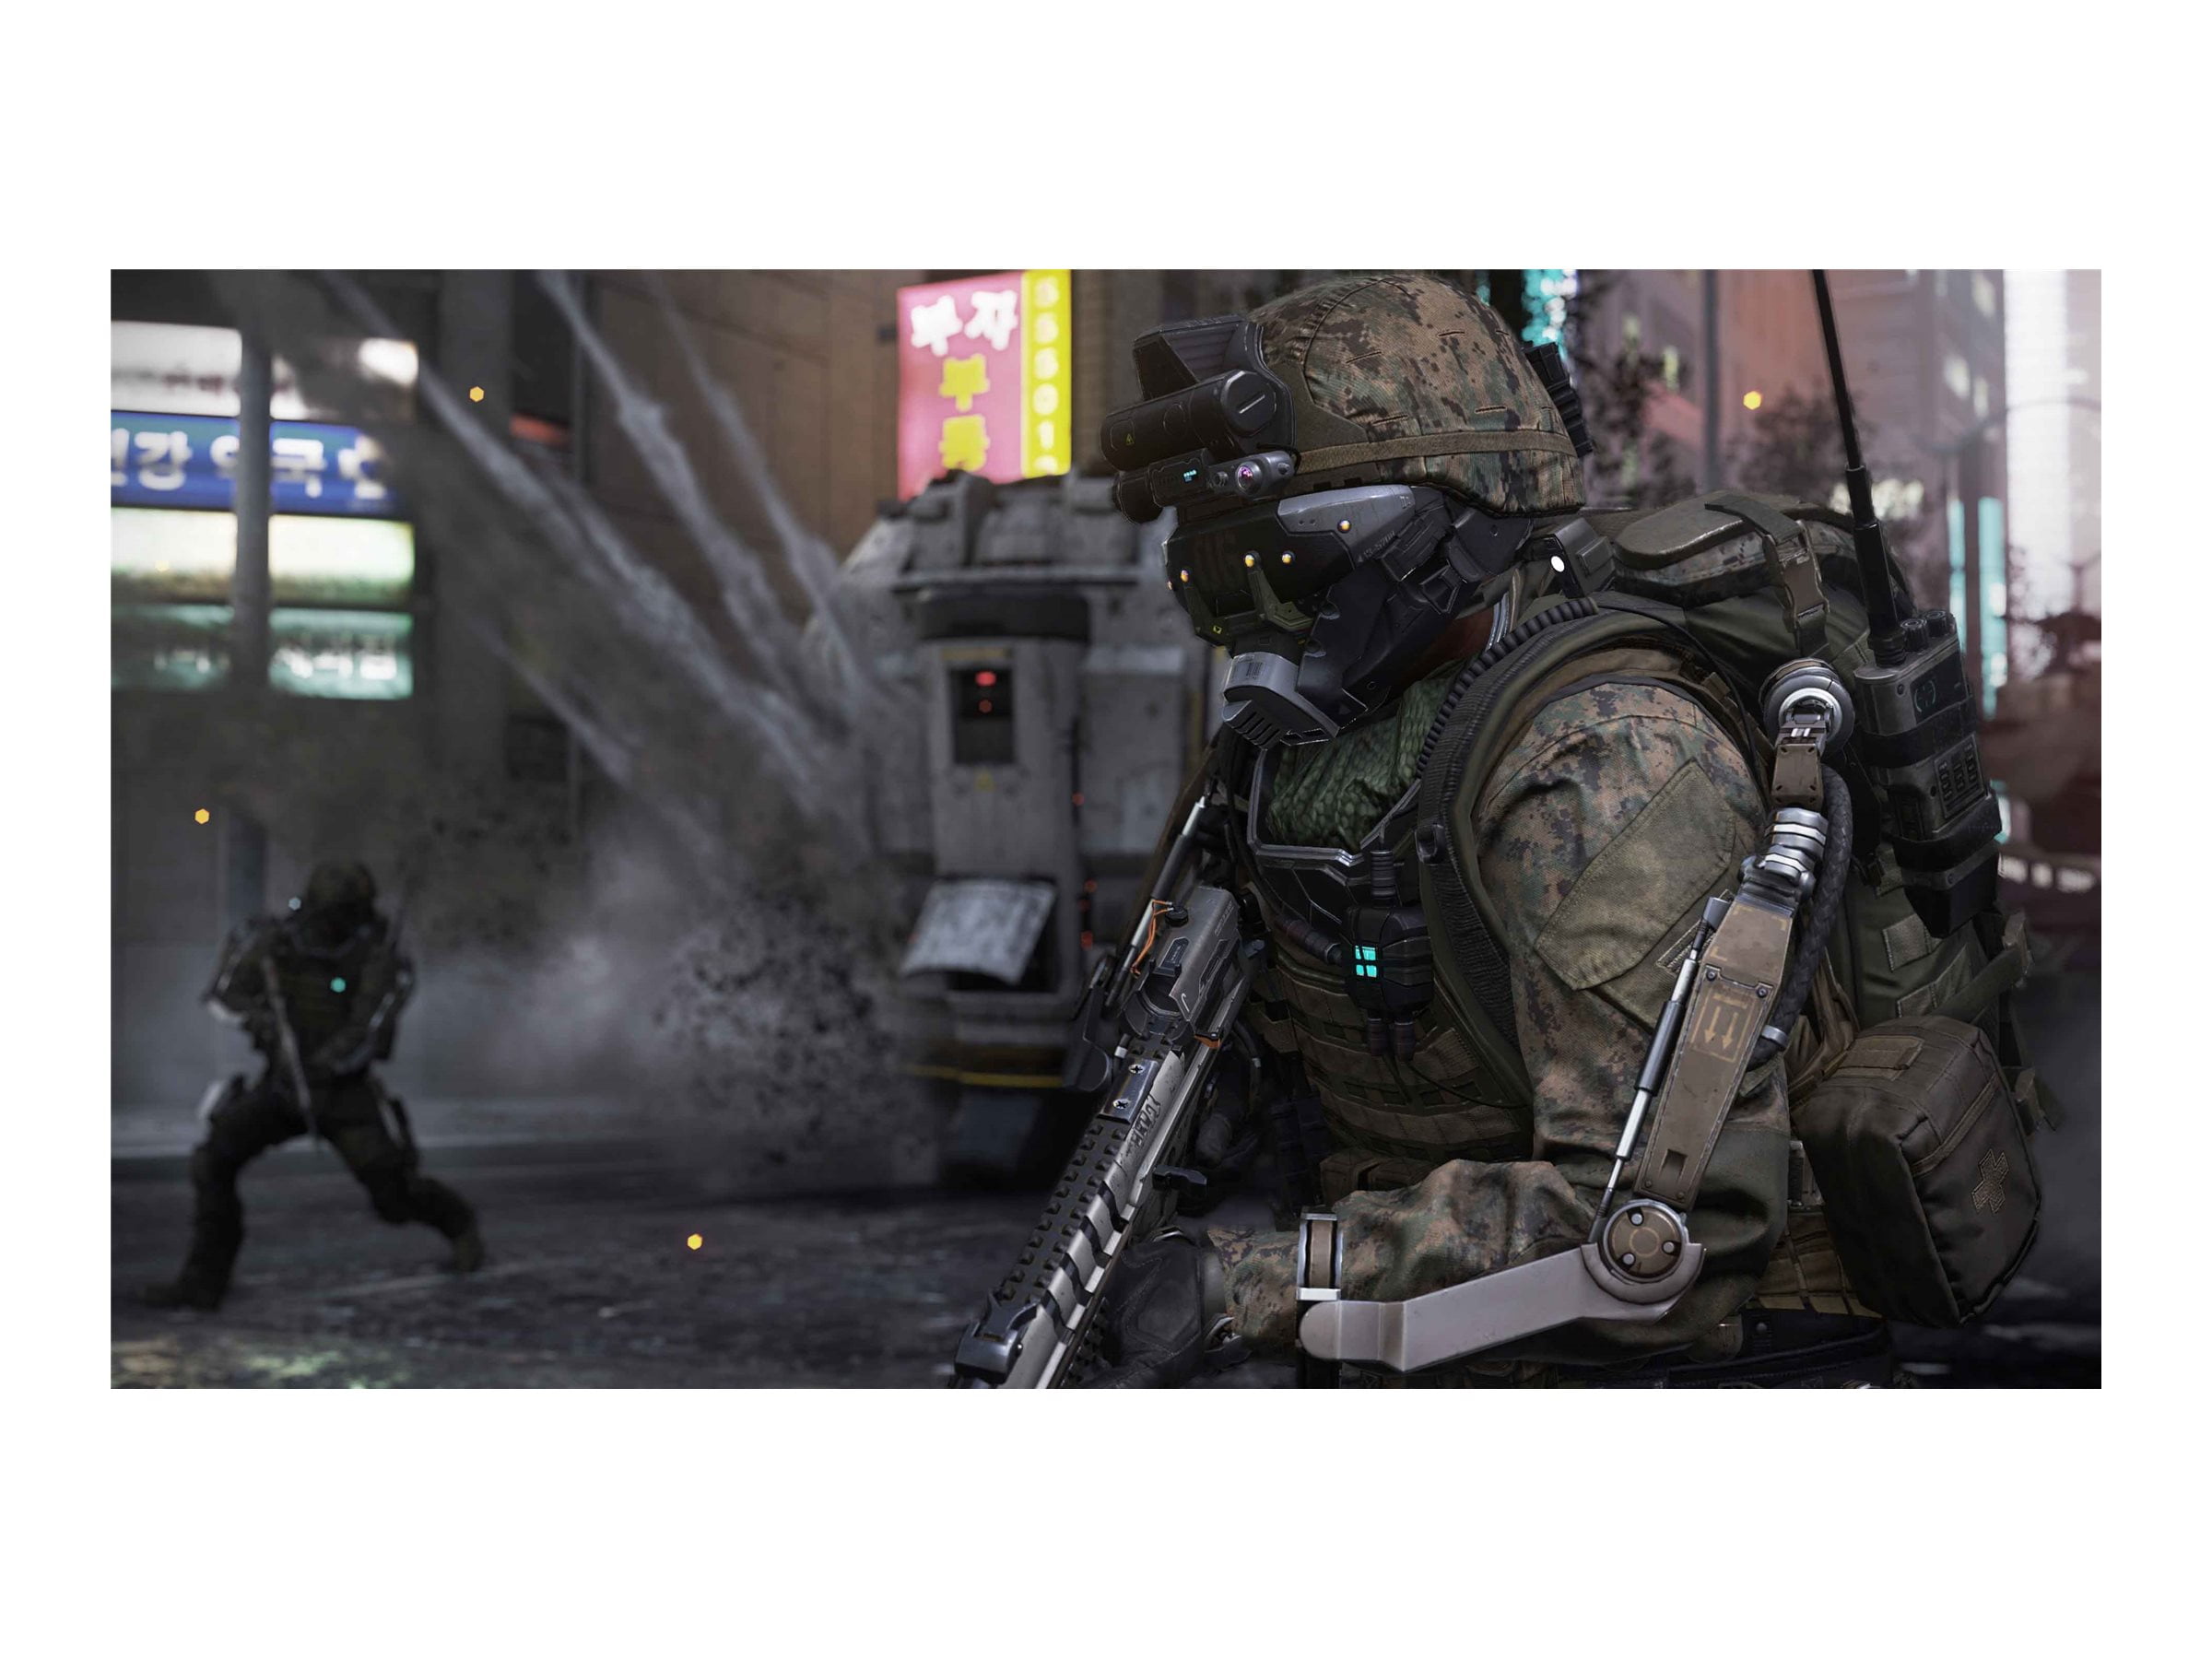 Call of Duty: Advanced Warfare - Day Zero • Xbox One – Mikes Game Shop